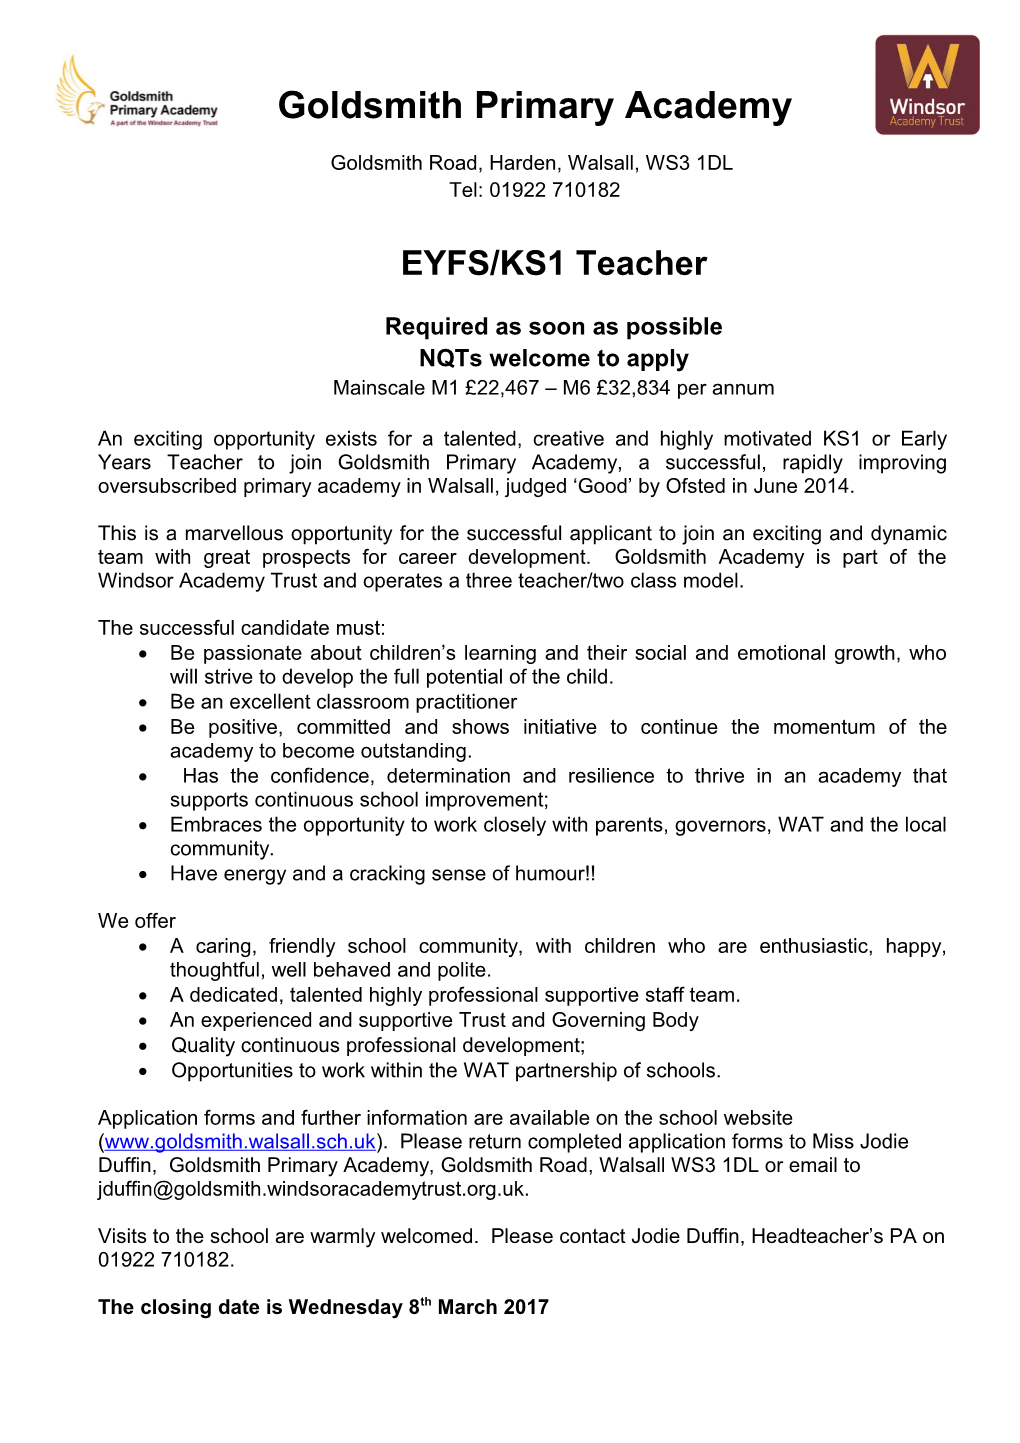 EYFS/KS1 Teacher